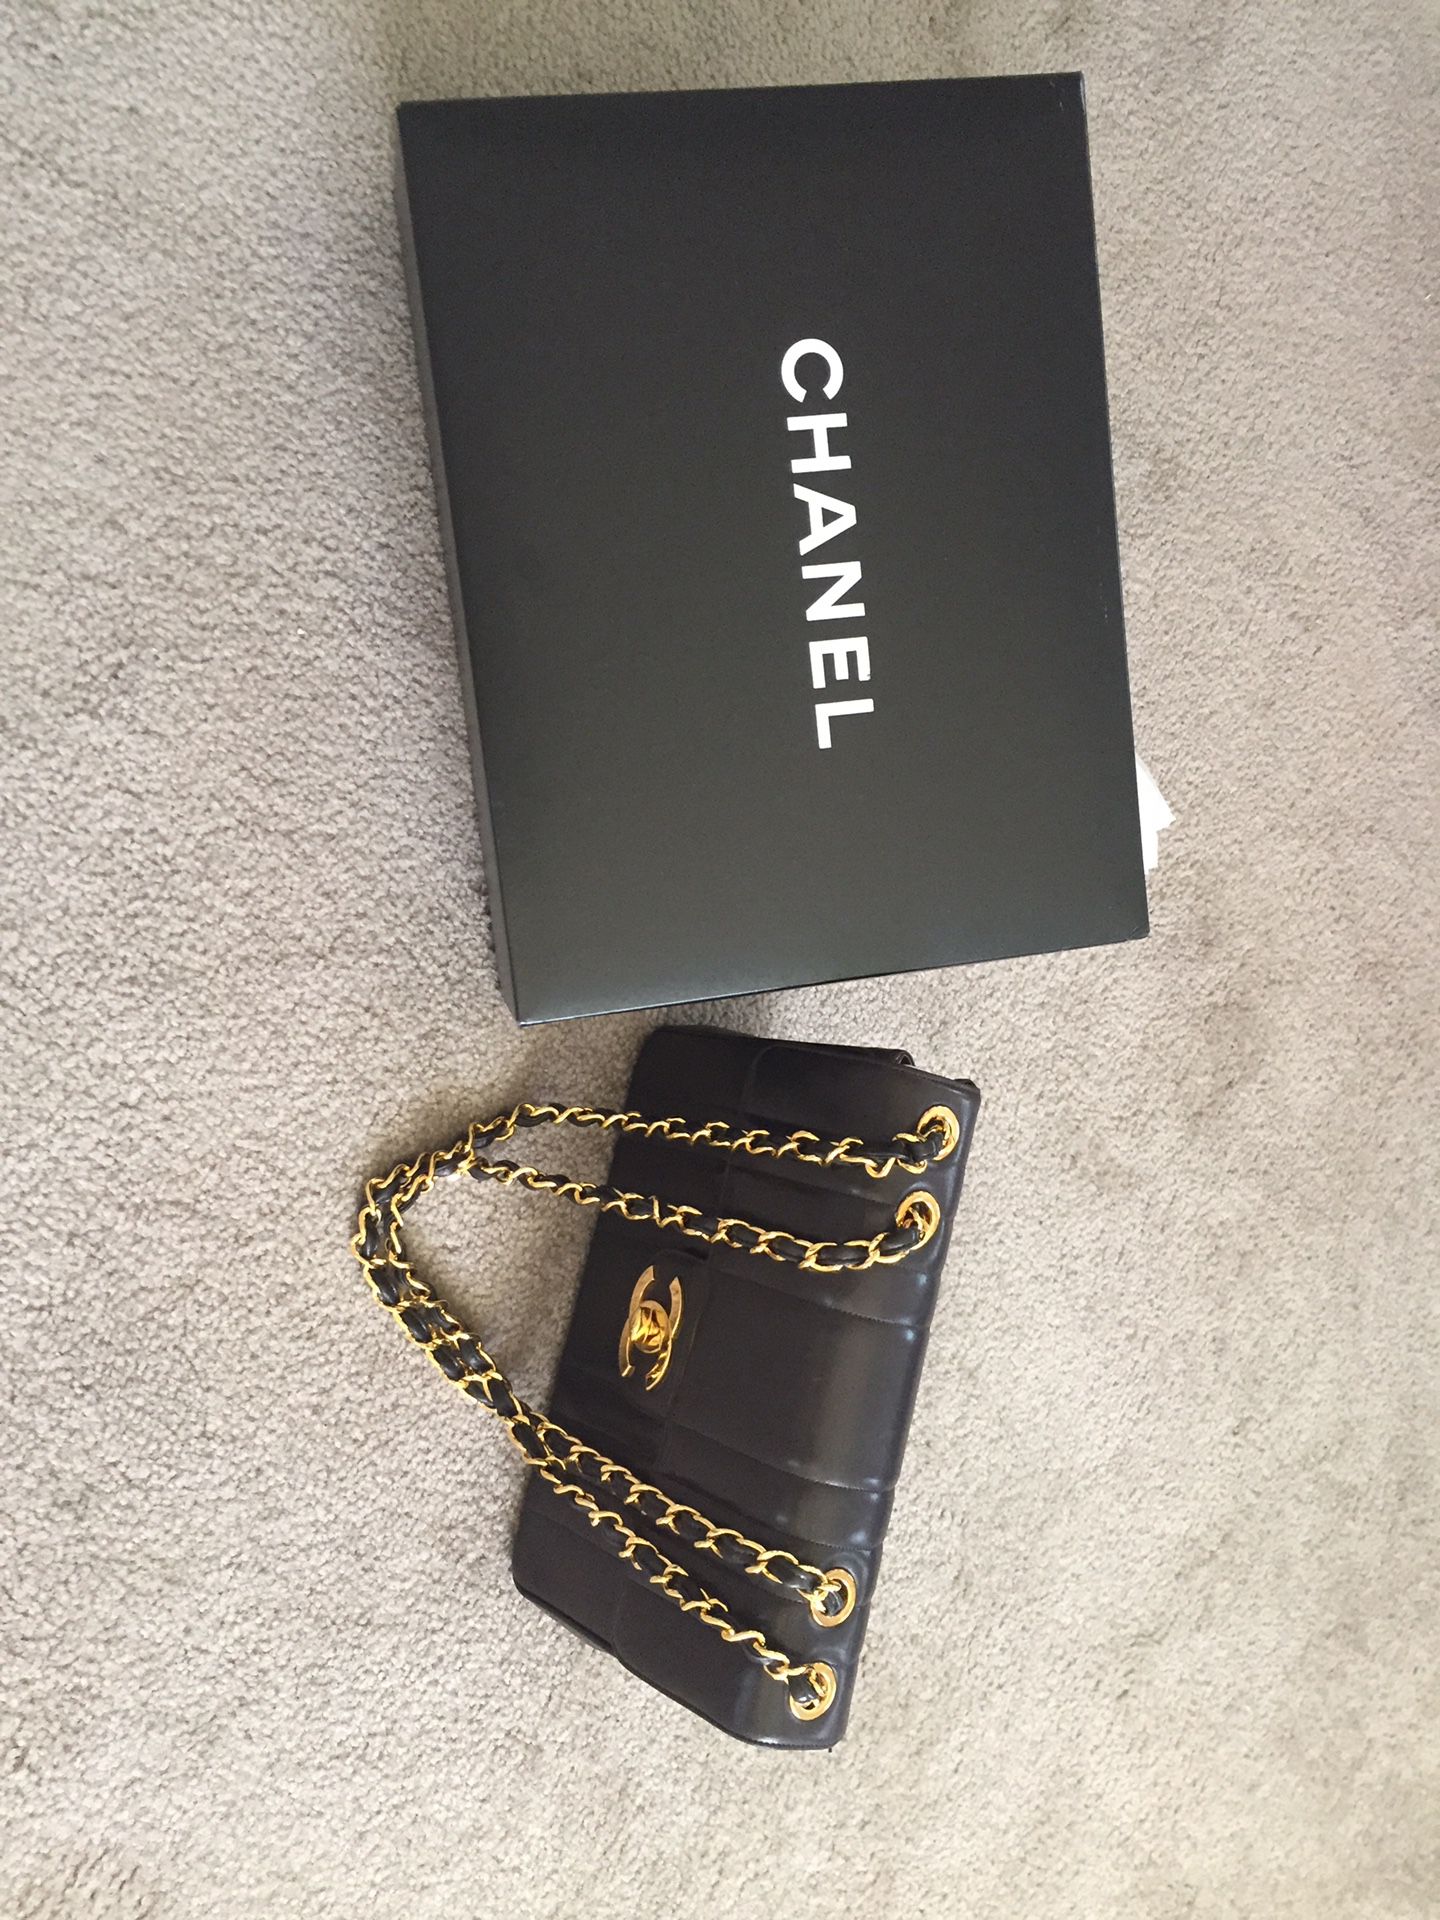 Mademoiselle vintage Chanel flap bag